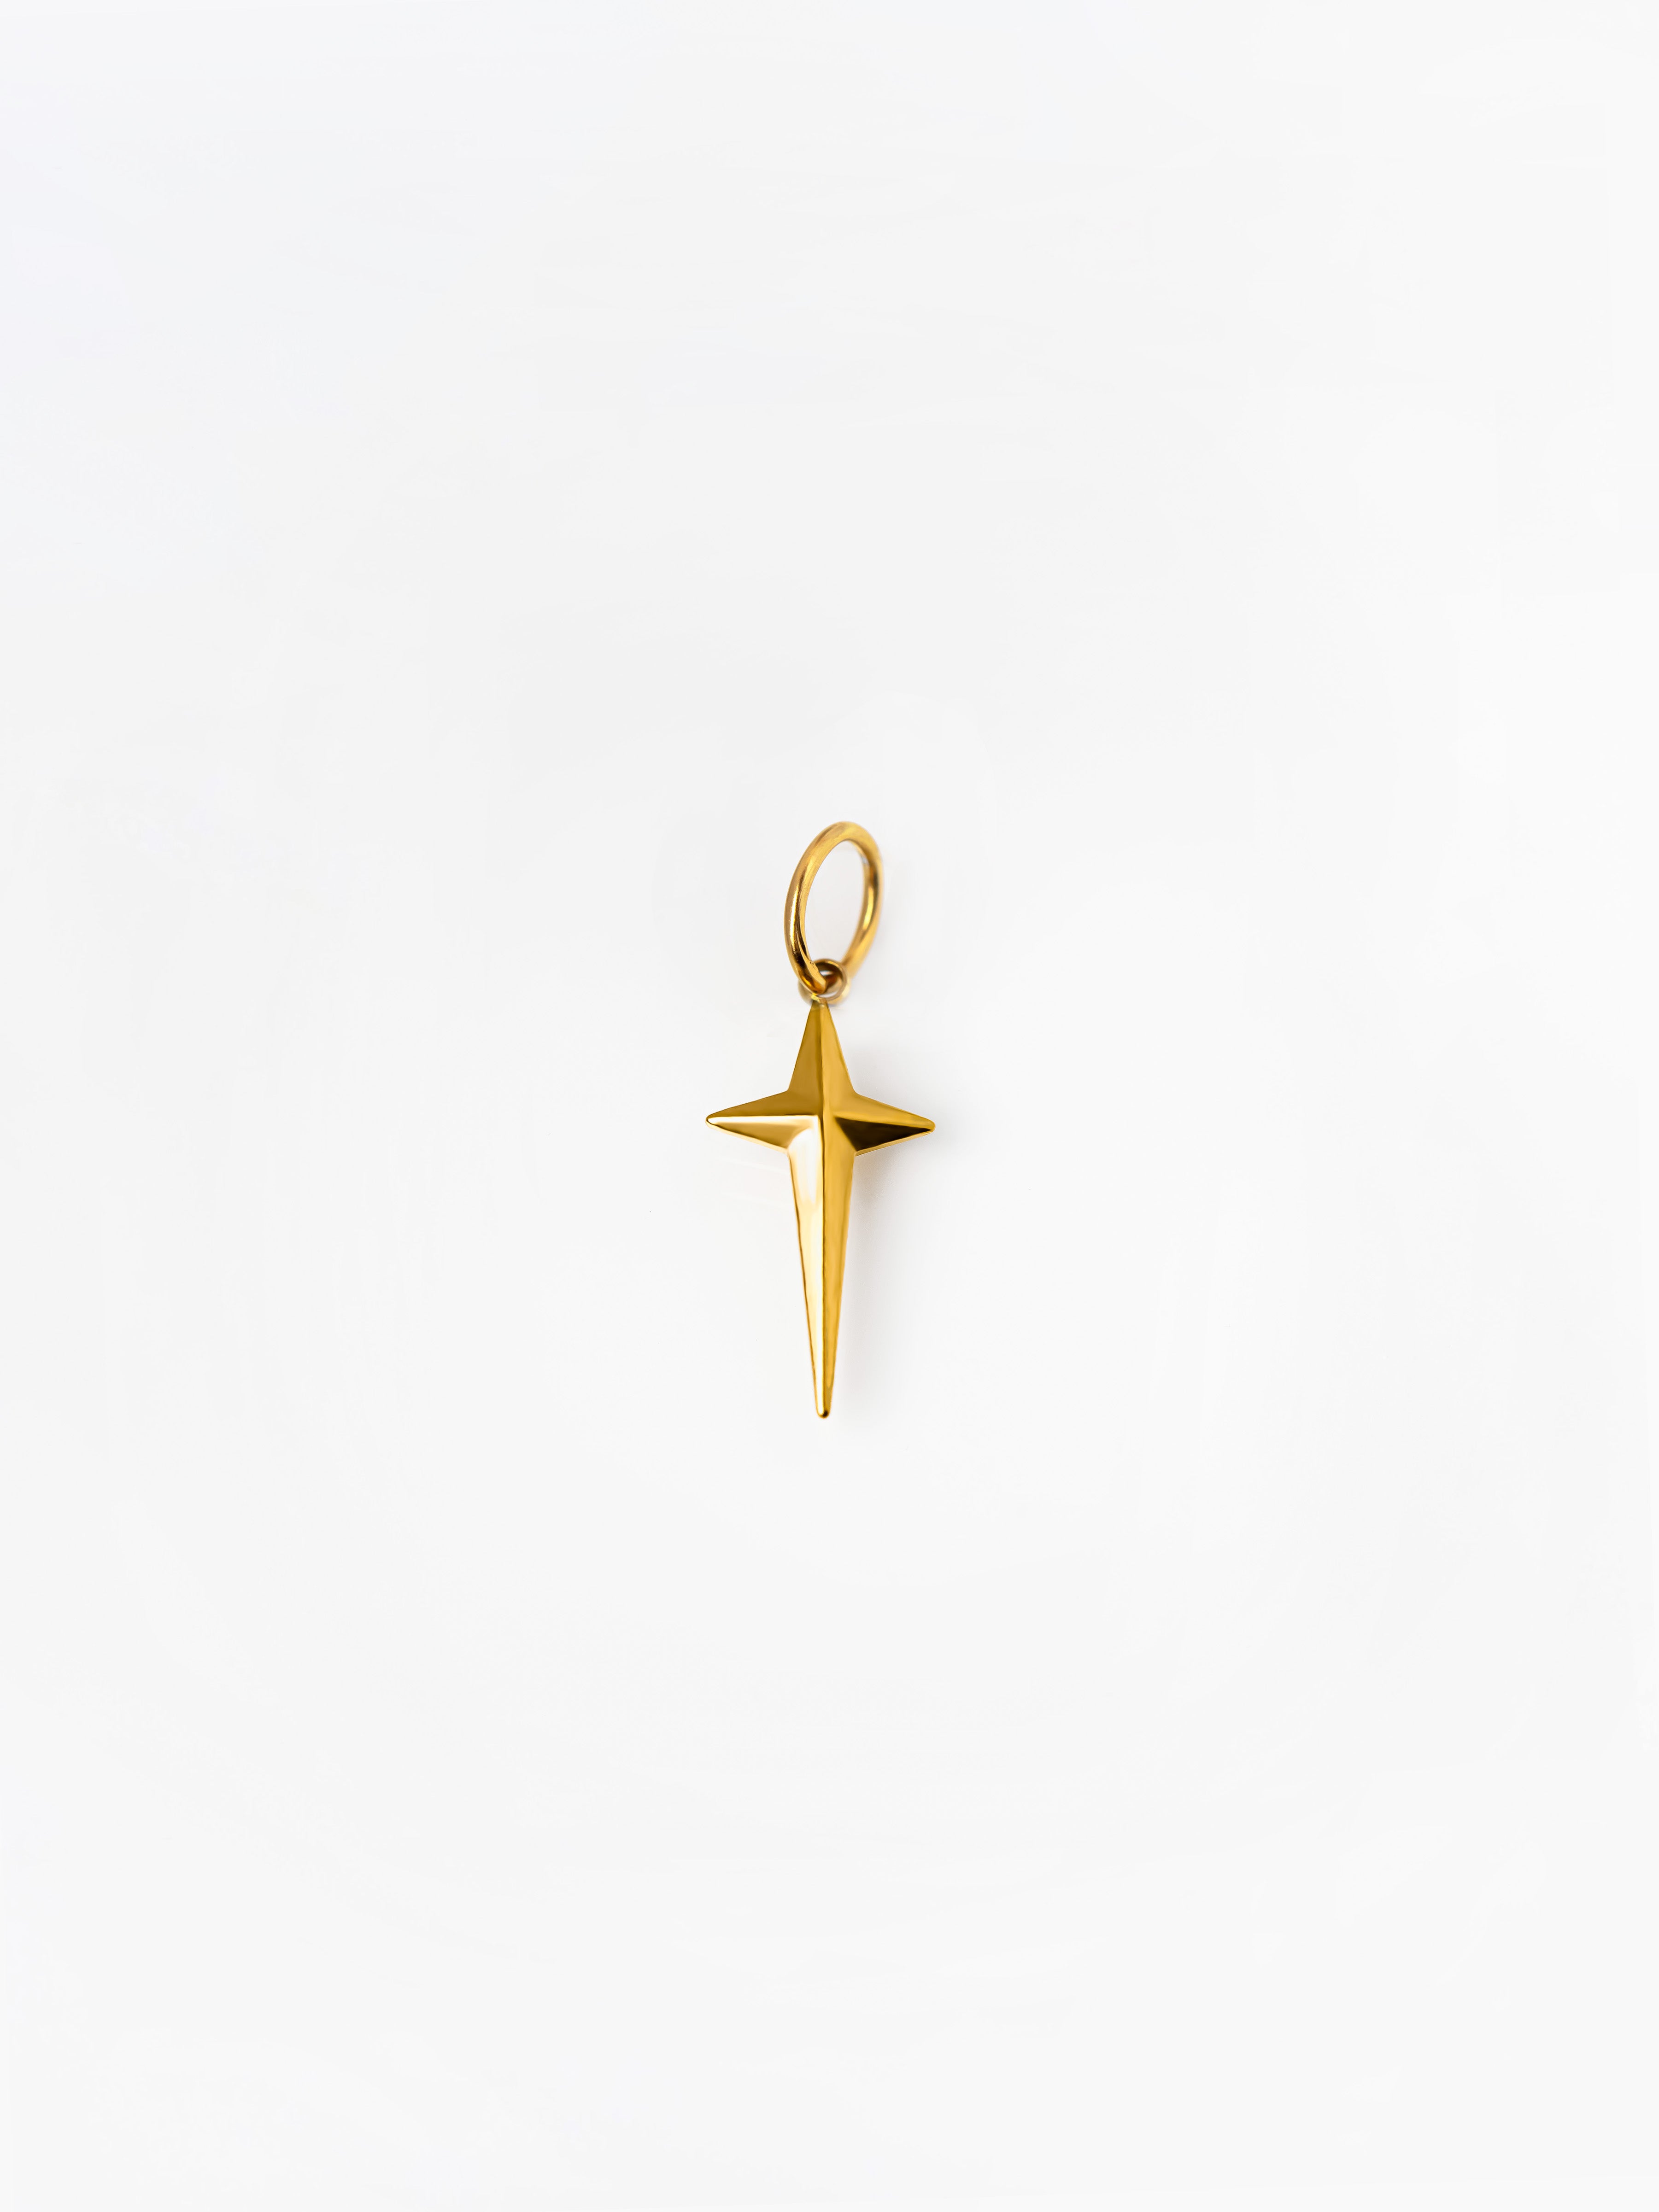 Gold Long Skinny Cross Pendant / Charm